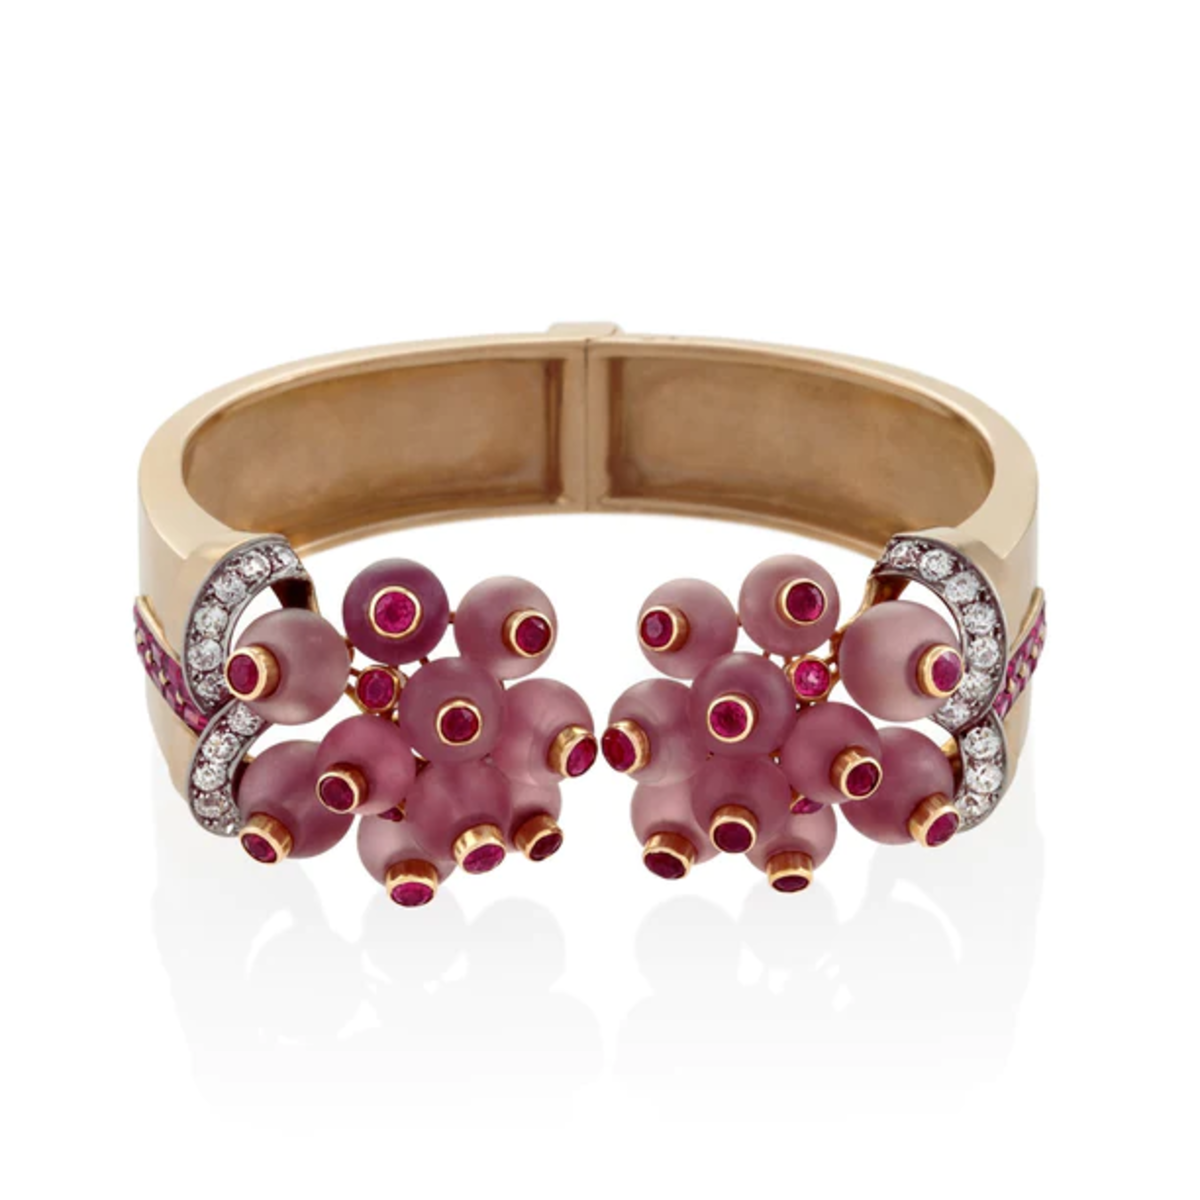 Verger Freres 1930s 18KT Rose Gold Ruby, Diamond & Rose Quartz Cuff Bracelet close-up front view